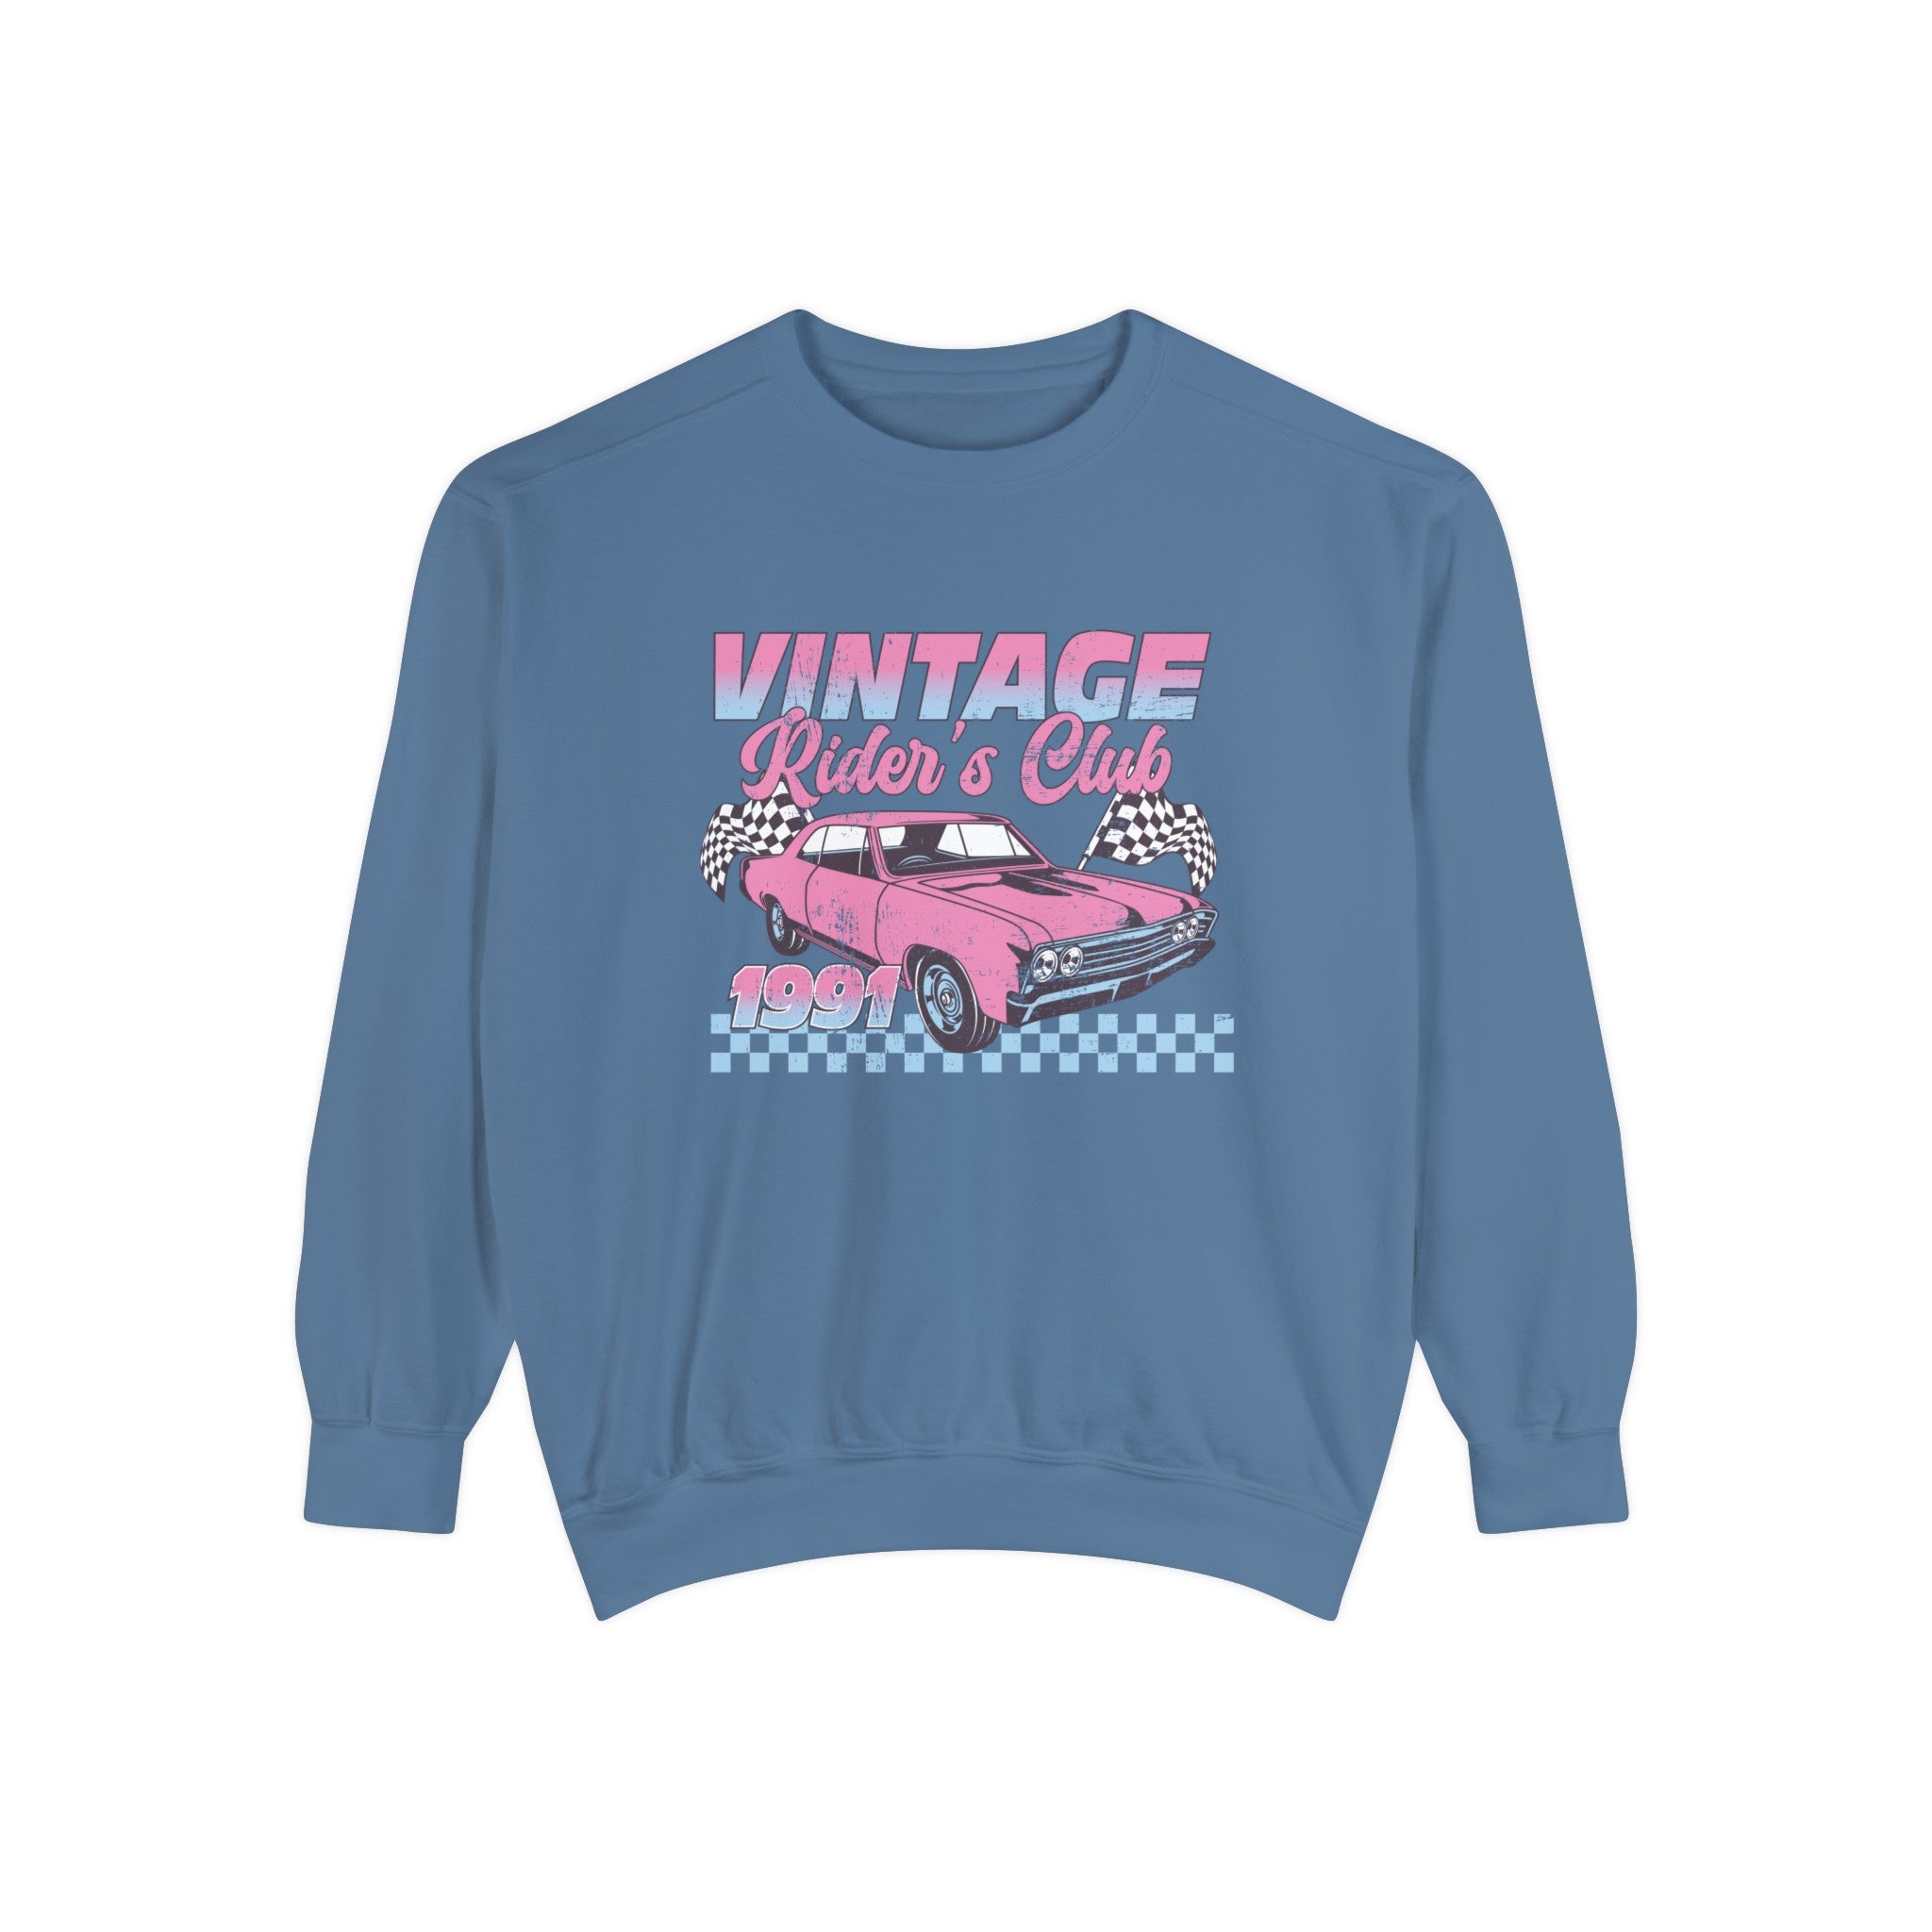 Vintage Riders Club 1991 Unisex Garment-Dyed Sweatshirt